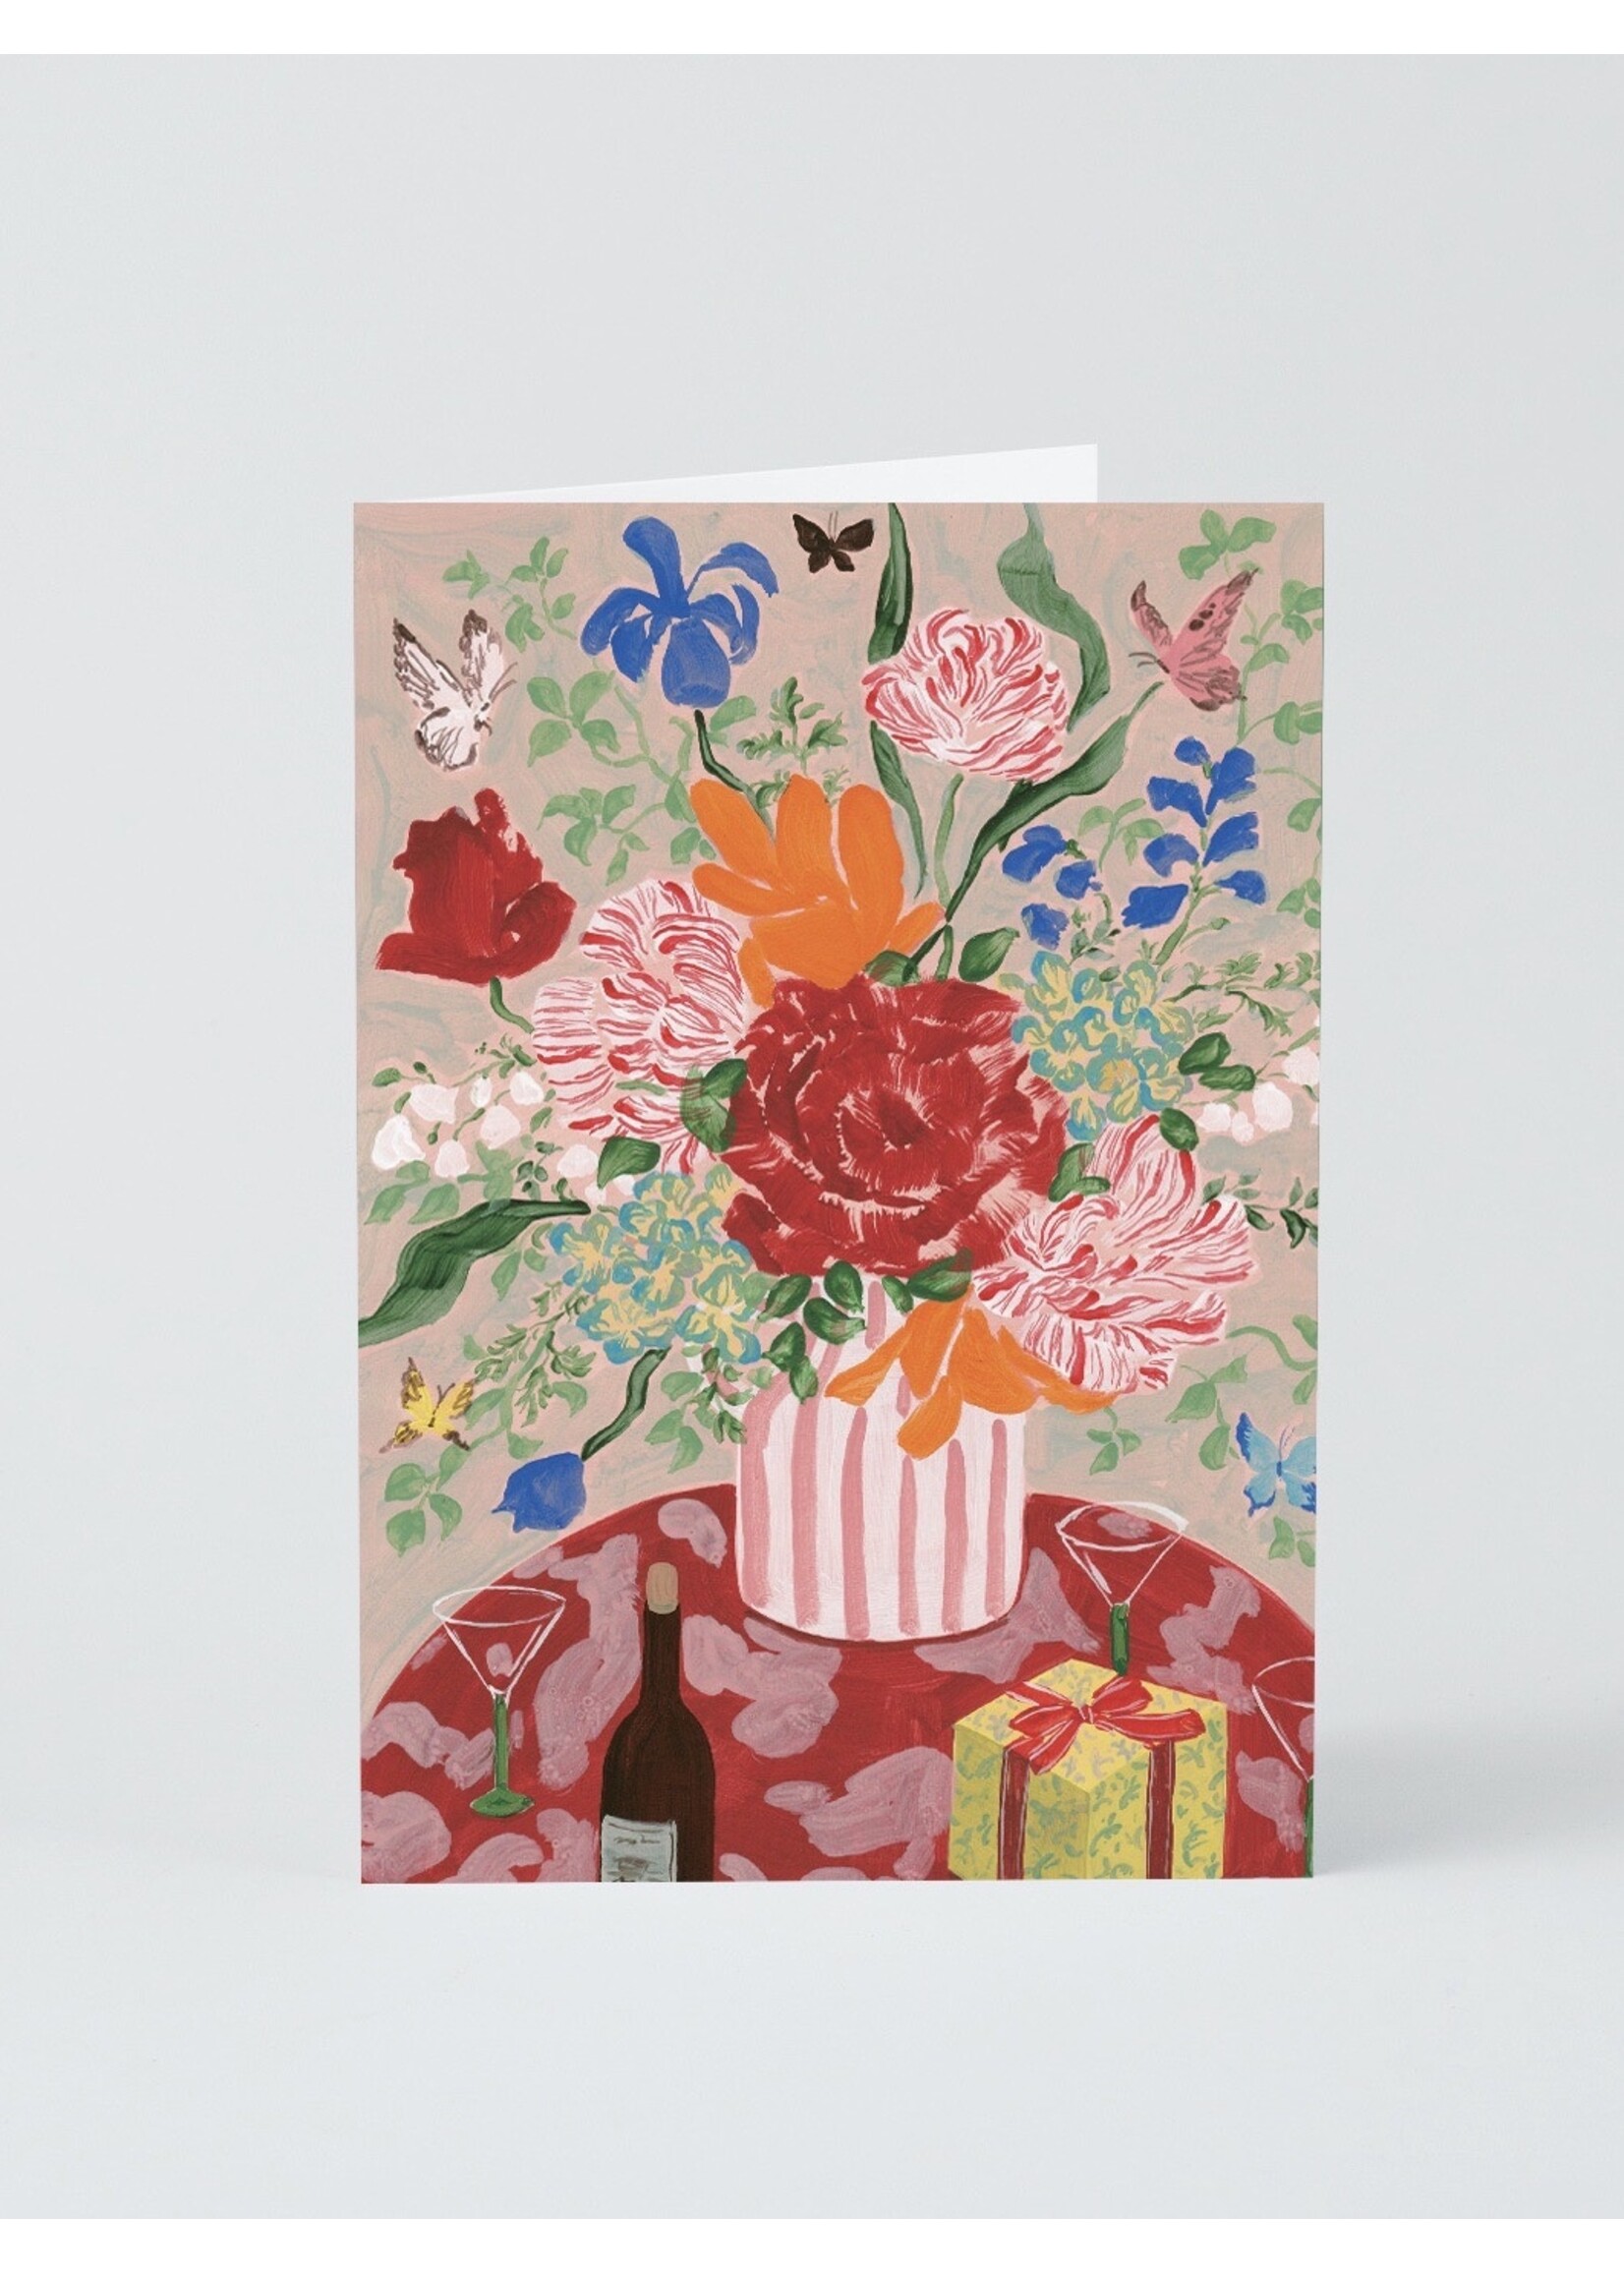 Wrap Stationery Art cards "Yukiko Noritake" by Wrap Stationnery